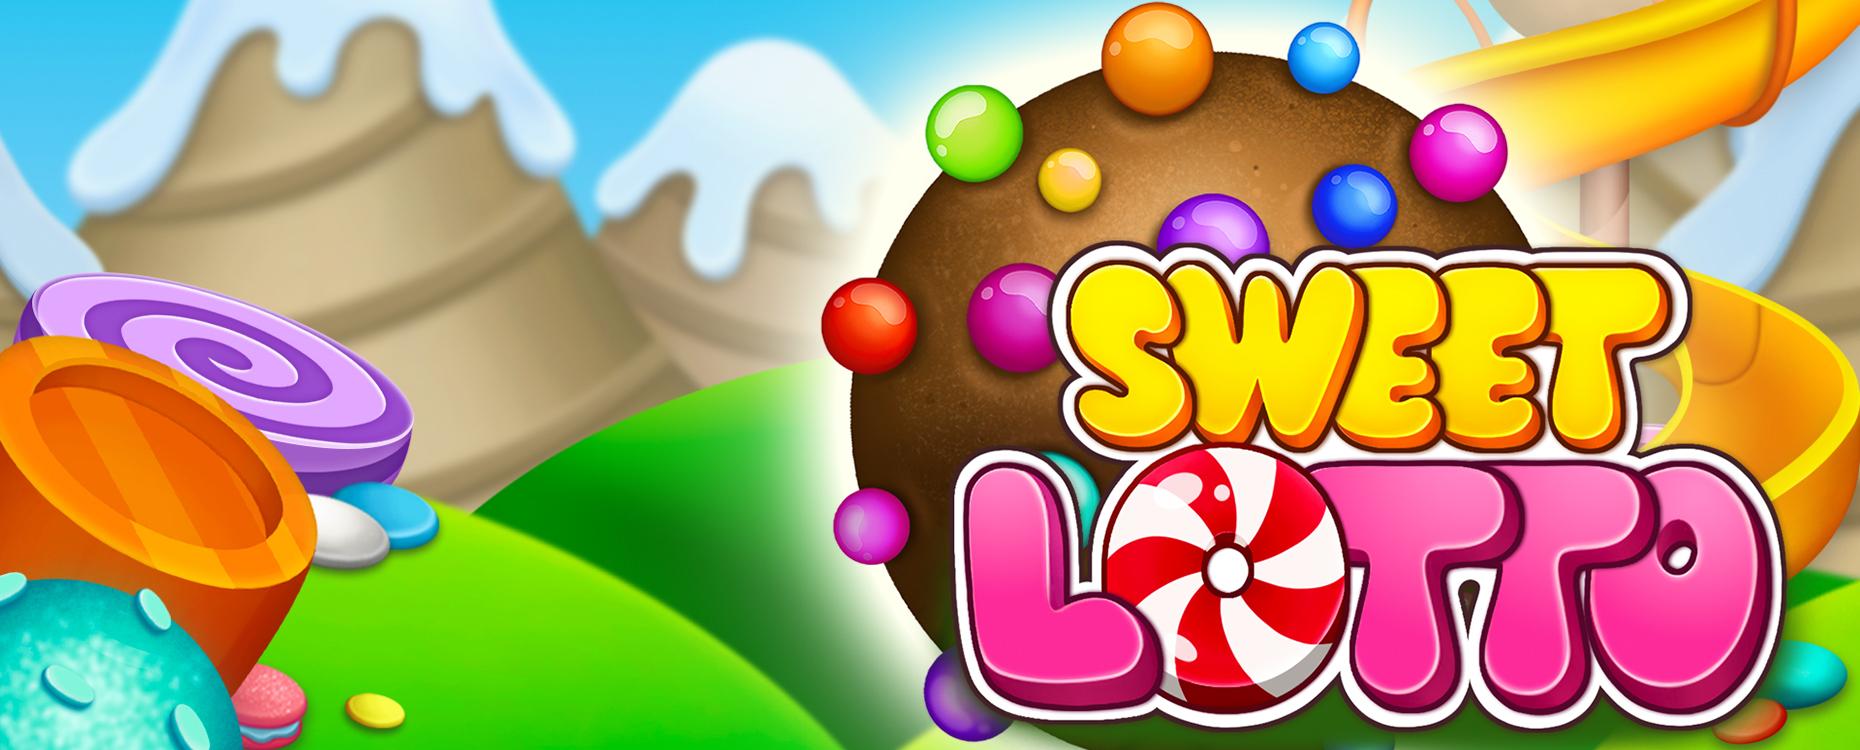 Sweet Lotto | Промо-материалы | Игровой автомат онлайн